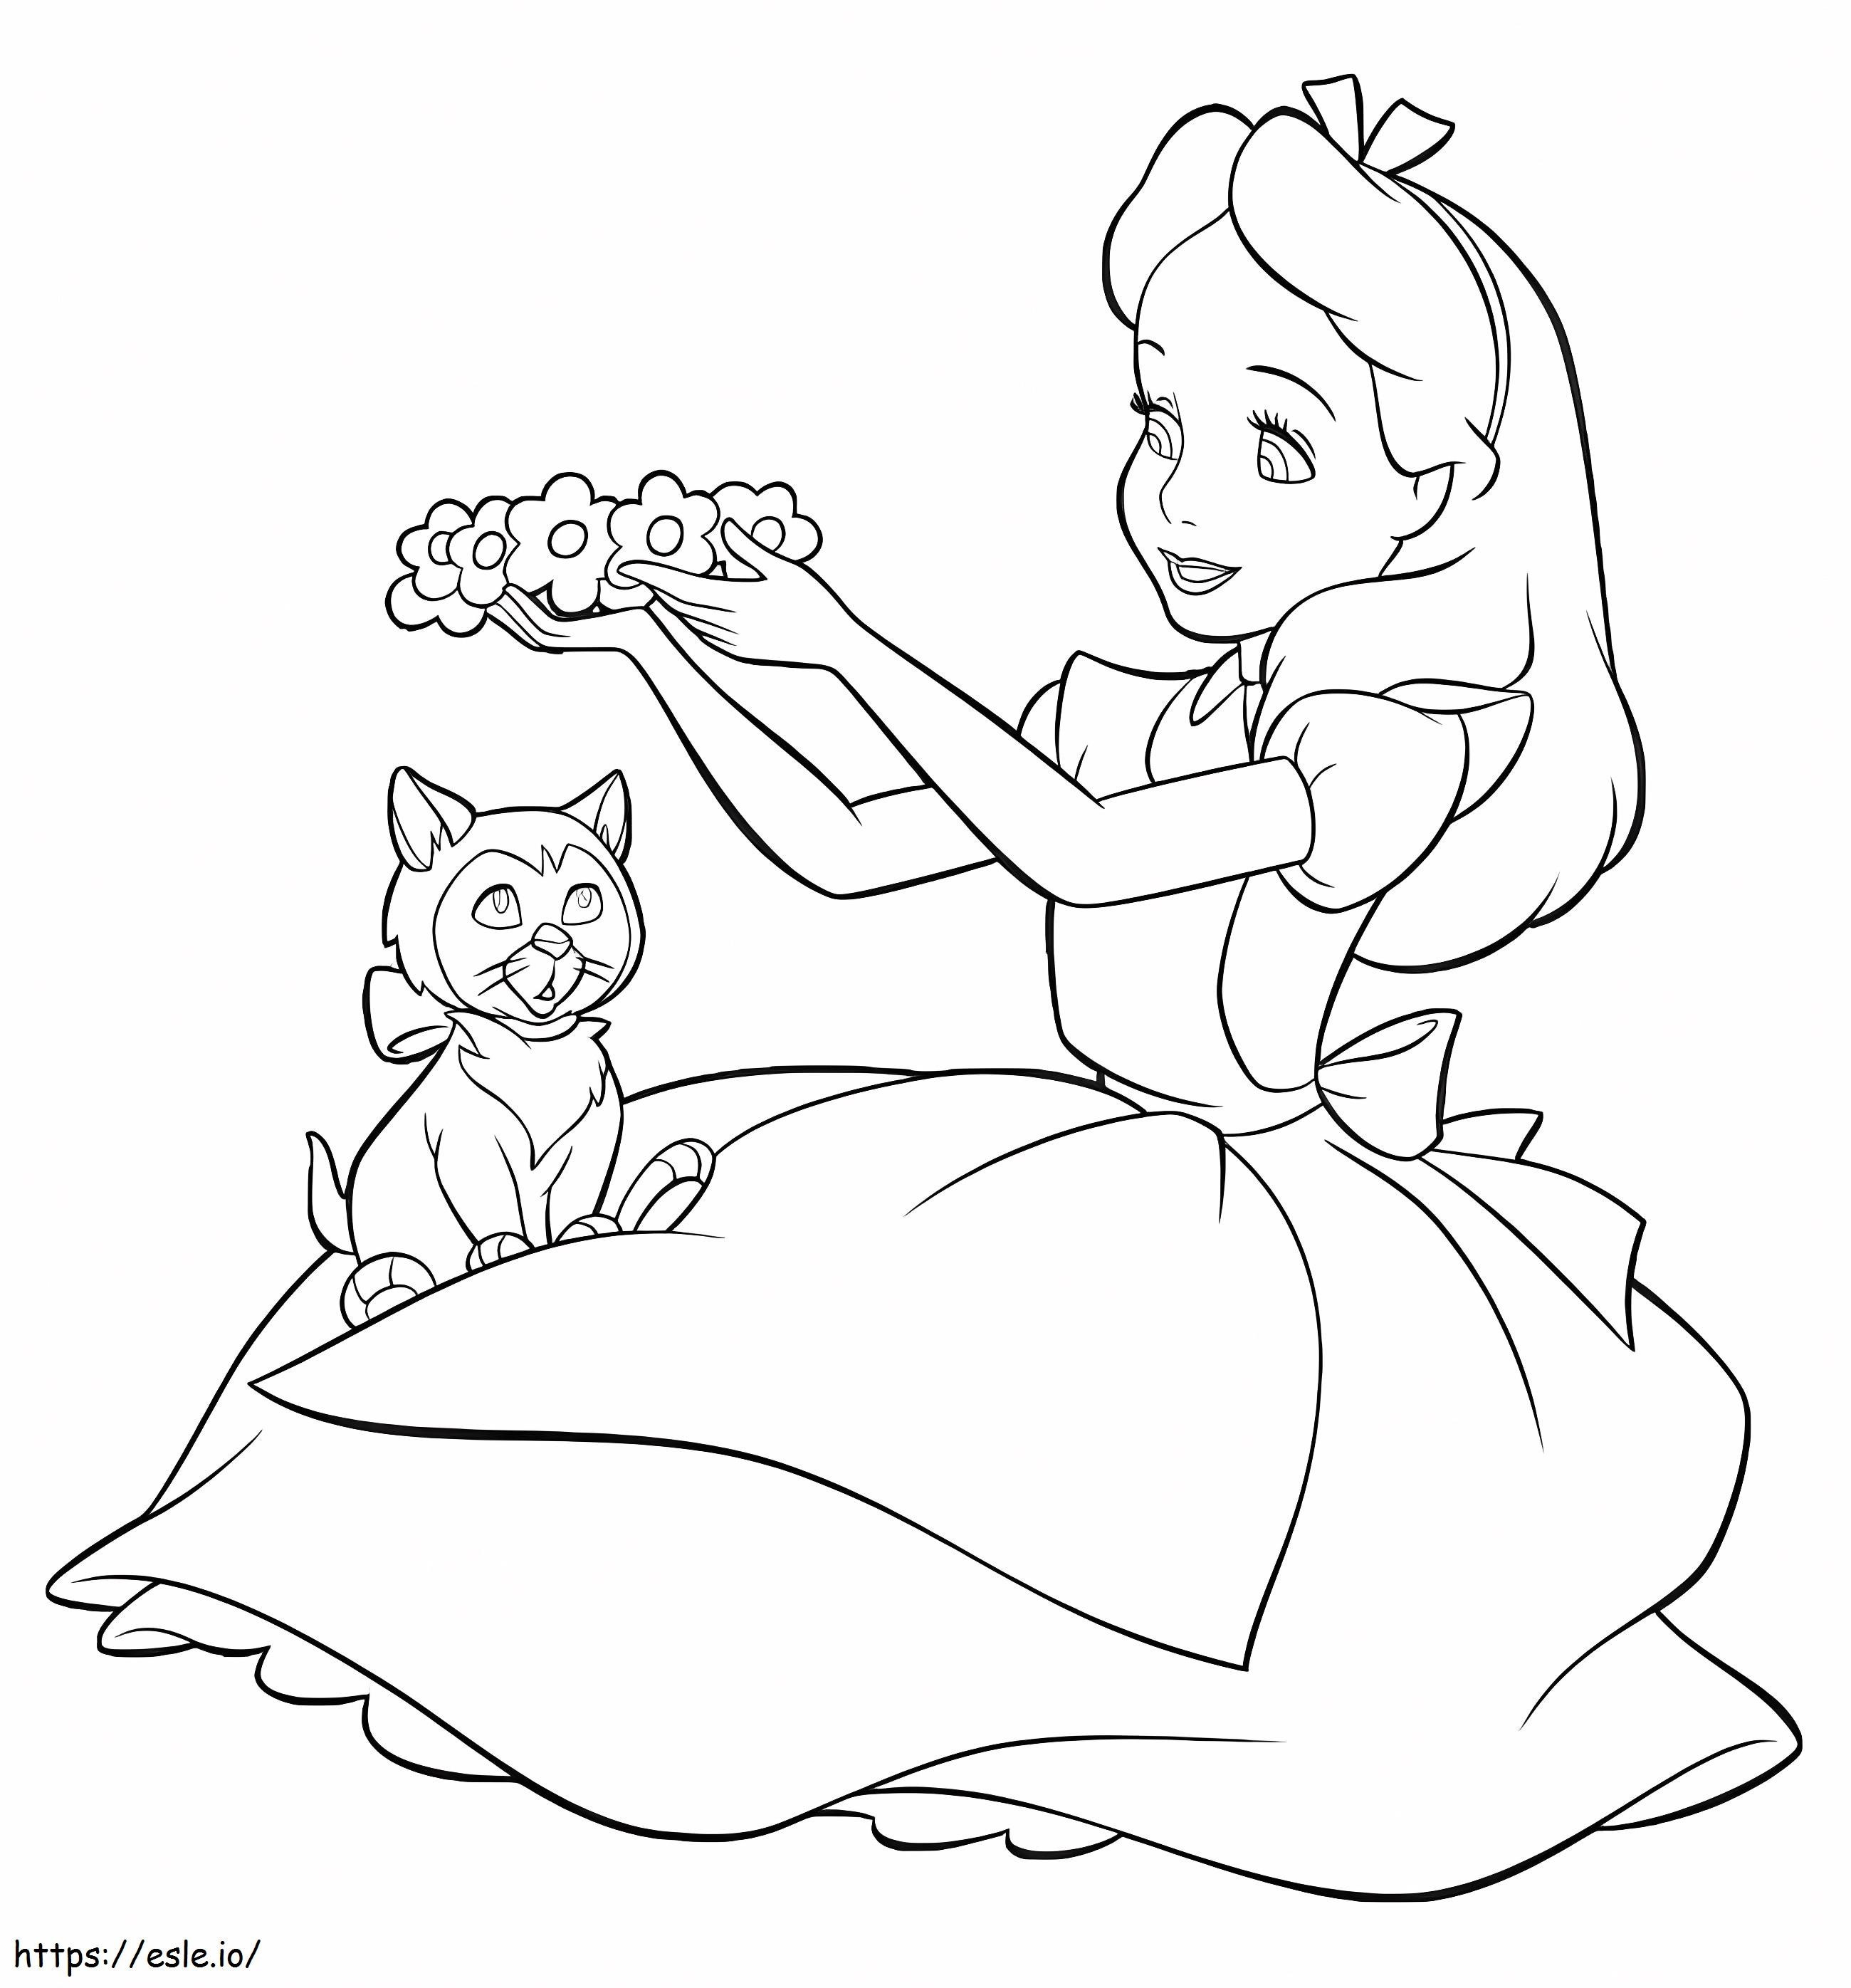 Alicja i kotek kolorowanka